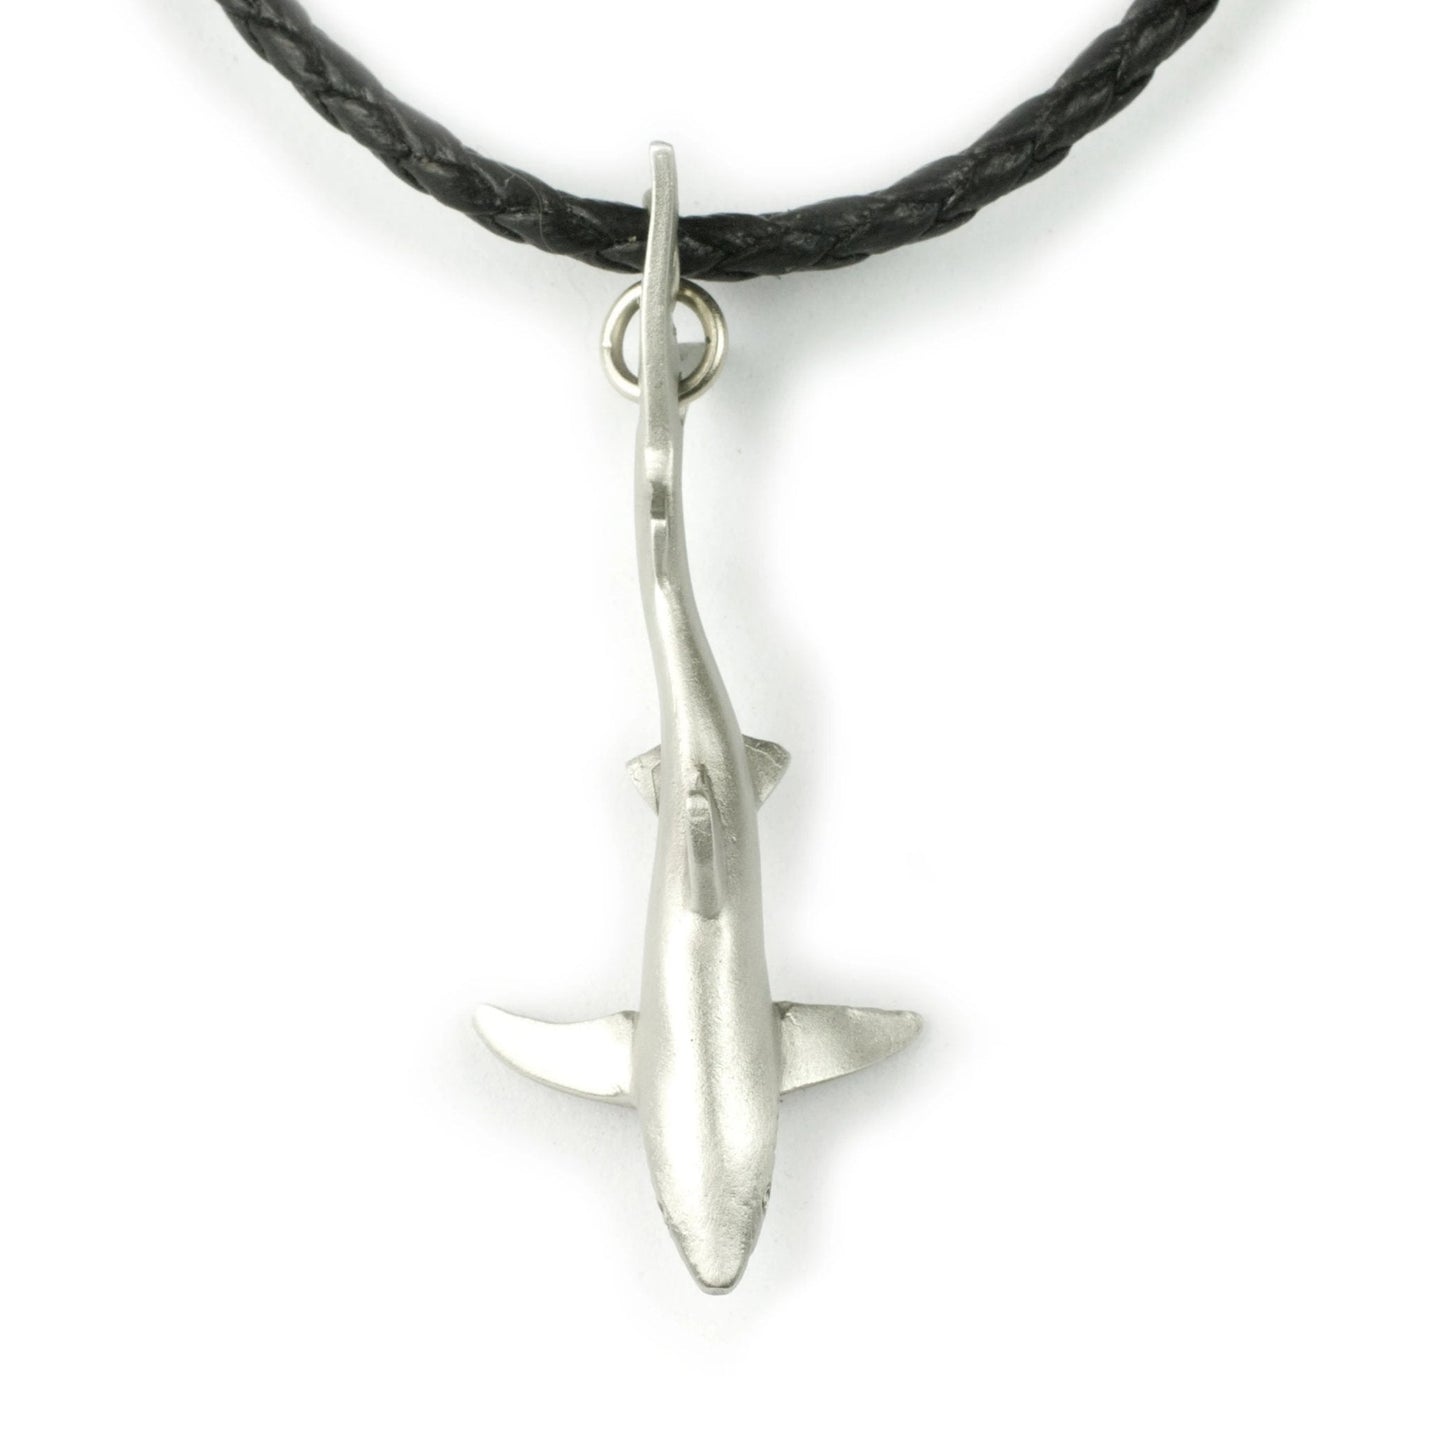 Blue Shark Necklace, Joe Romeiro Shark Necklace- Shark Gifts for Women and Men, Shark Charm, Gifts for Shark Lovers, Sea Life Jewelry, Shark Pendant - The Tool Store